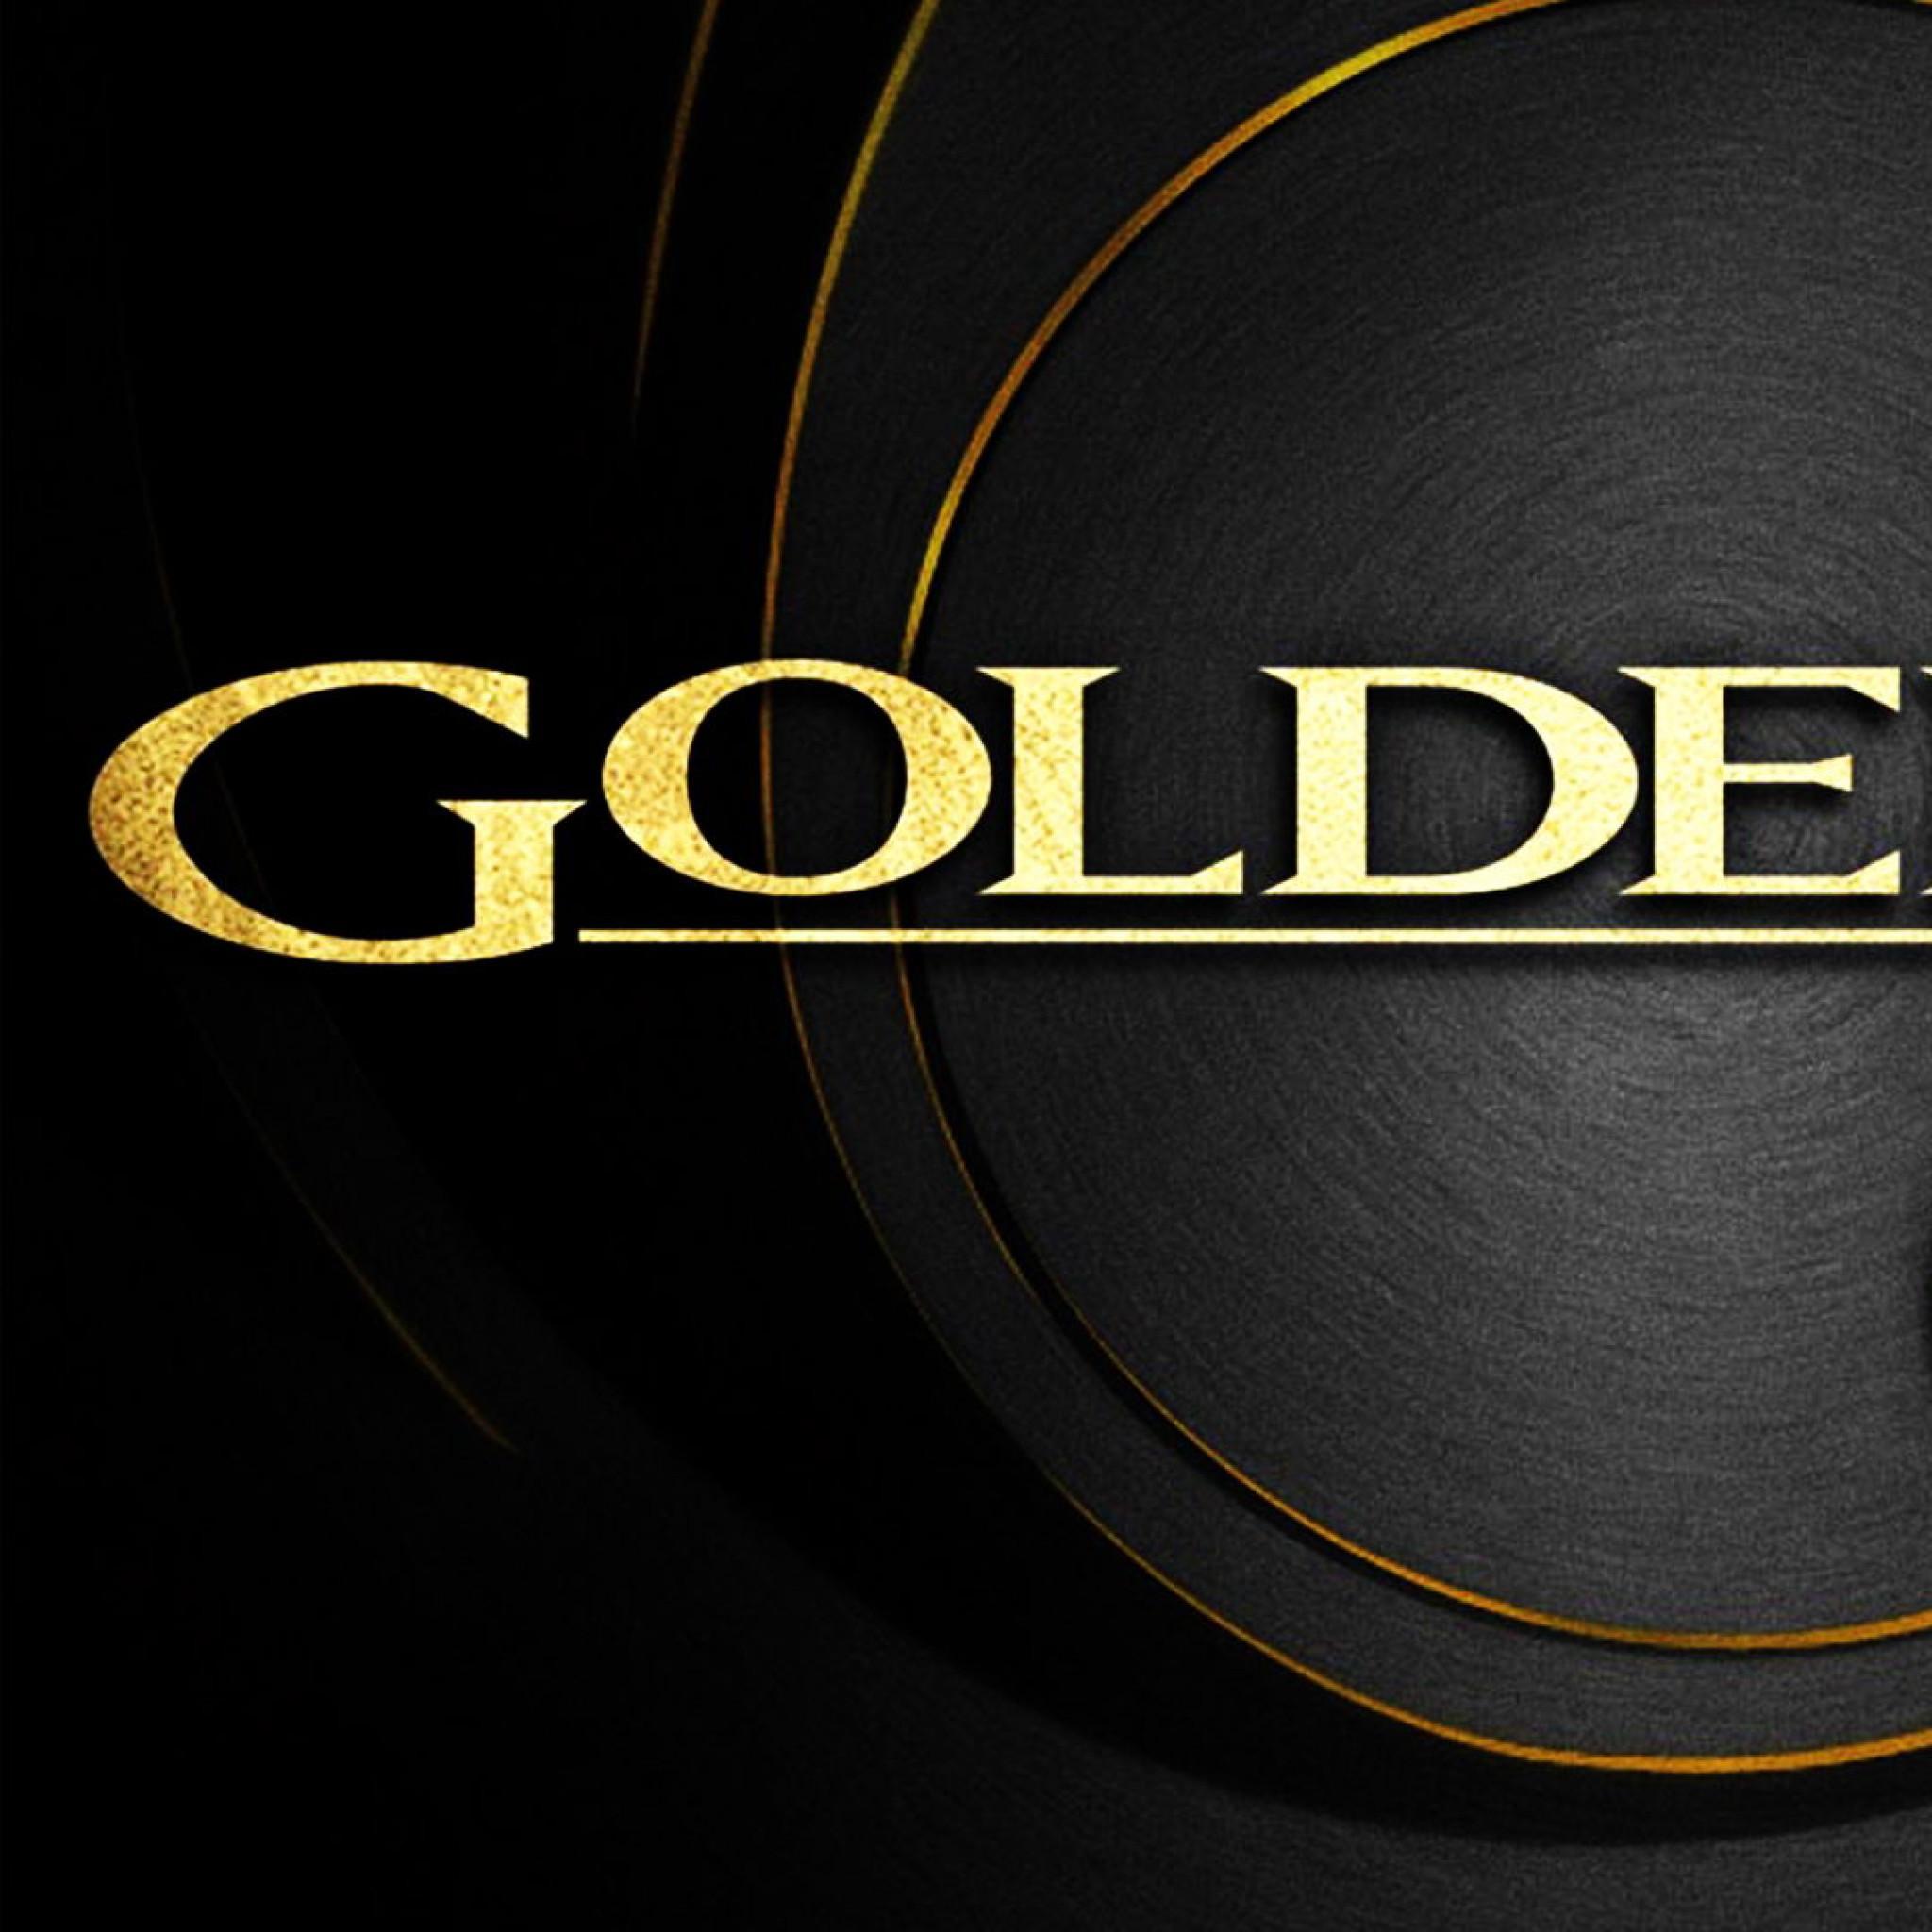 GoldenEye 007 Wallpaper 4k Download